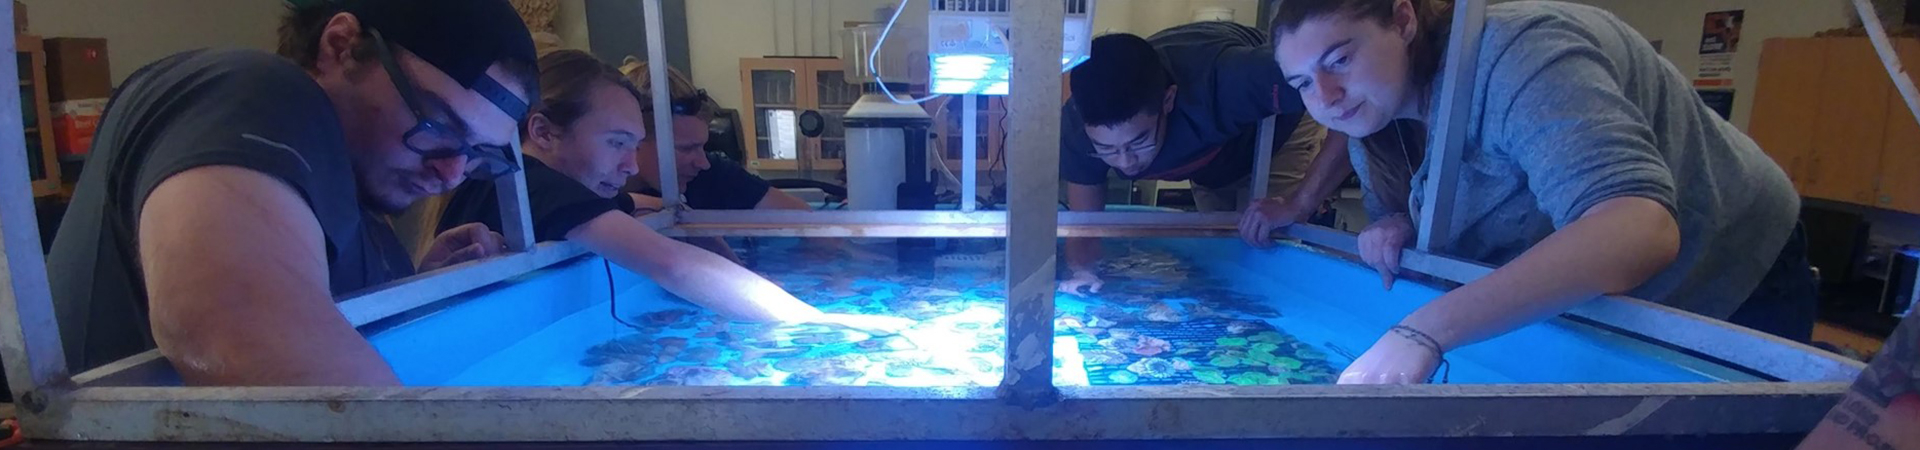 Students working at the aquariumm